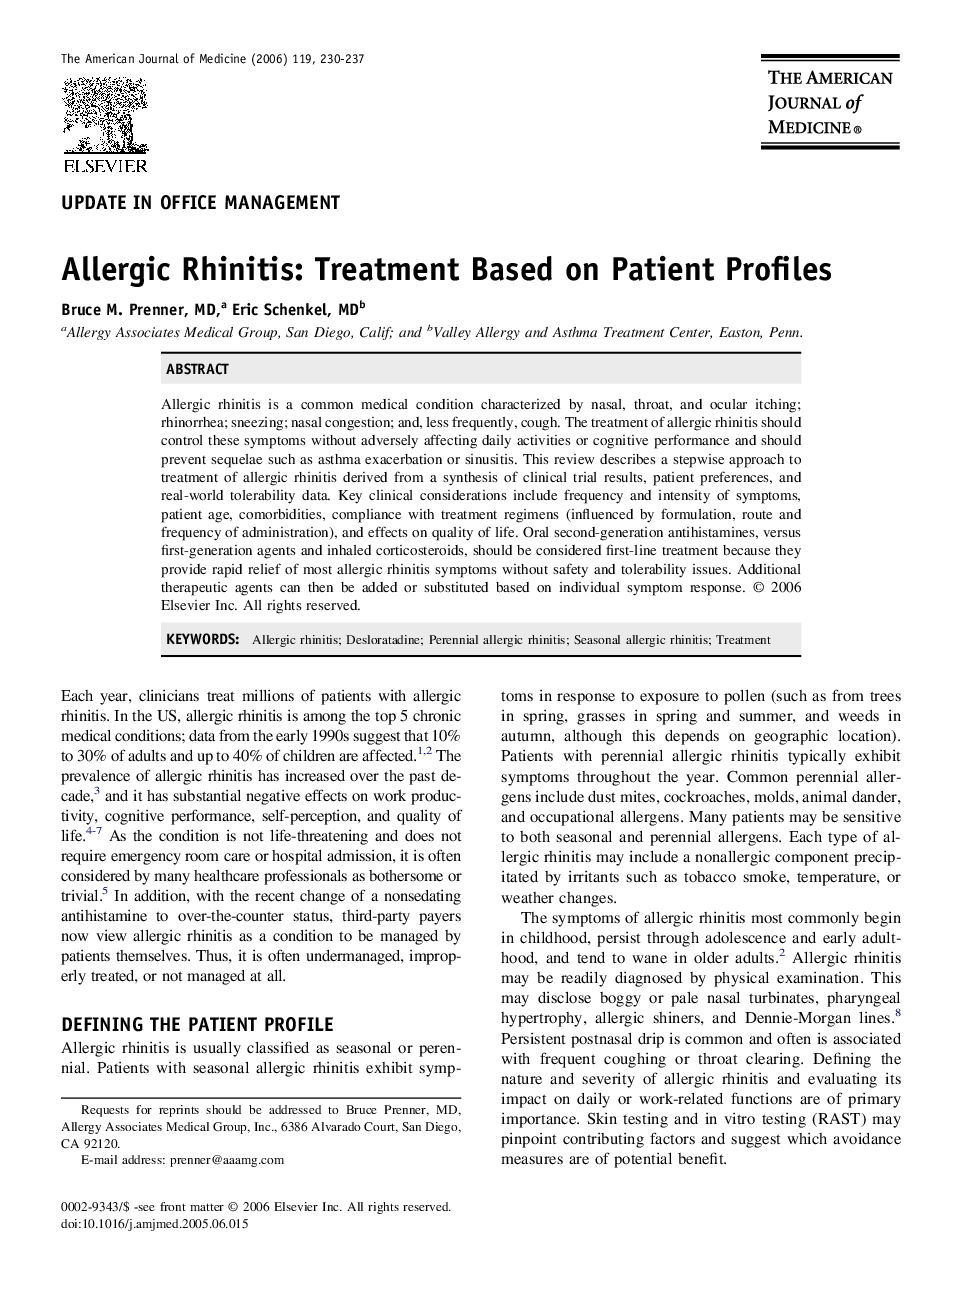 Allergic Rhinitis: Treatment Based on Patient Profiles